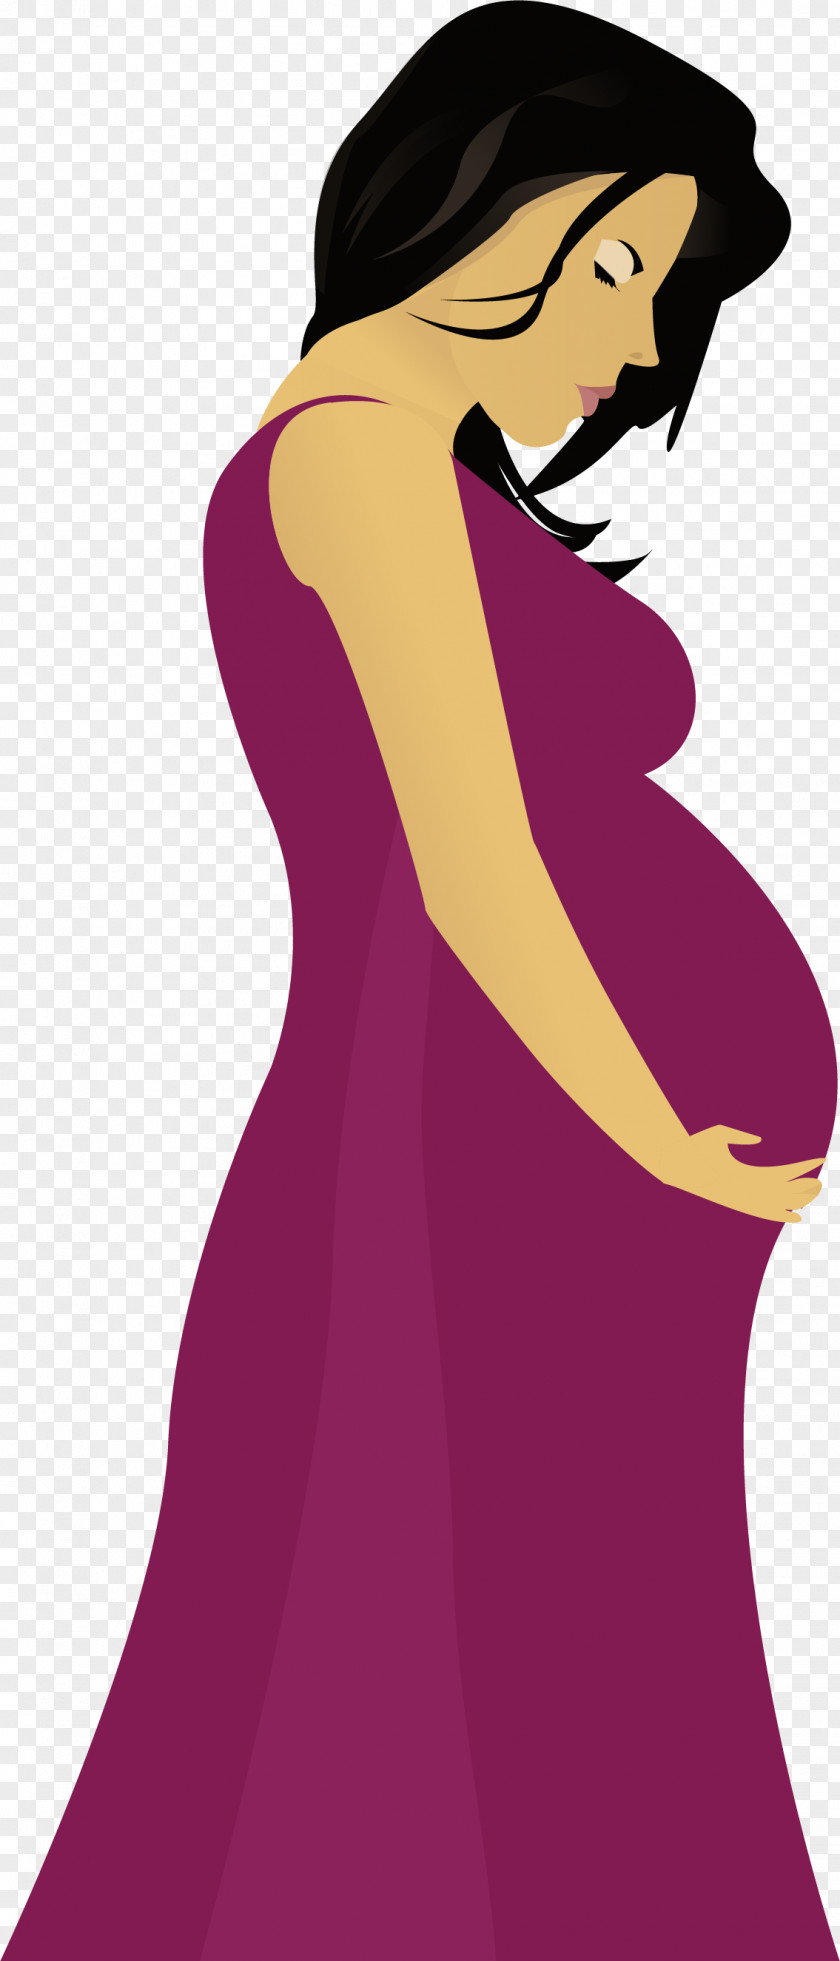 A Woman Who Has Children Implantation Bleeding Pregnancy Fertilisation PNG